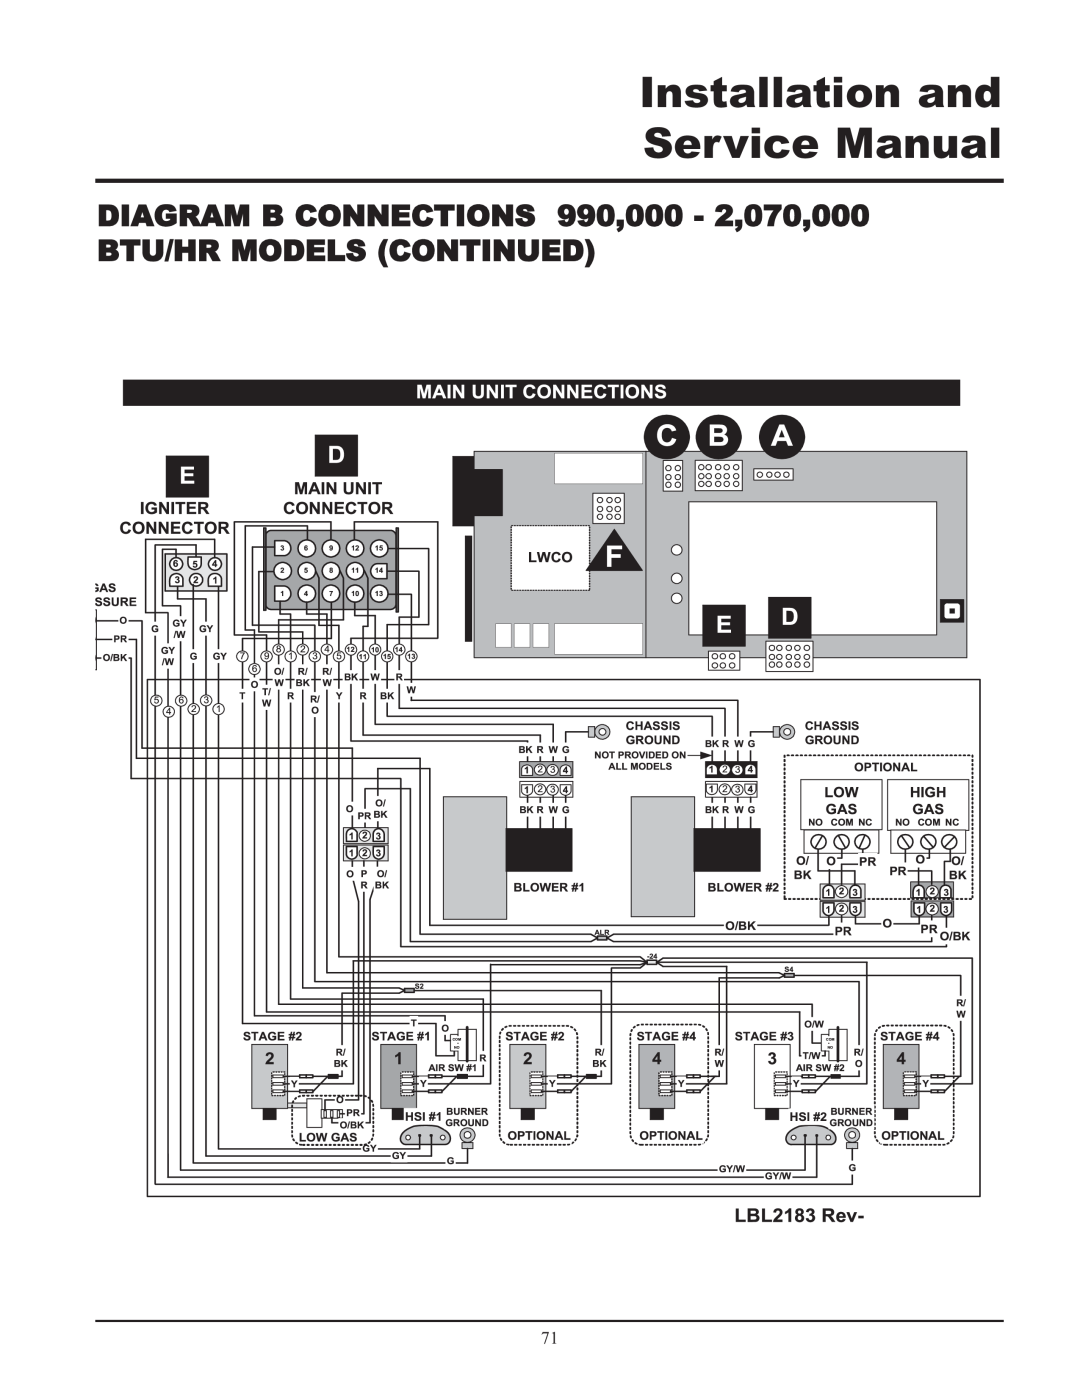 Lochinvar 399, 999 - 750, CF-CH(E)-i&s-08 service manual DIAGRAM B CONNECTIONS 990,000 - 2,070,000, Btu/Hr Models Continued 